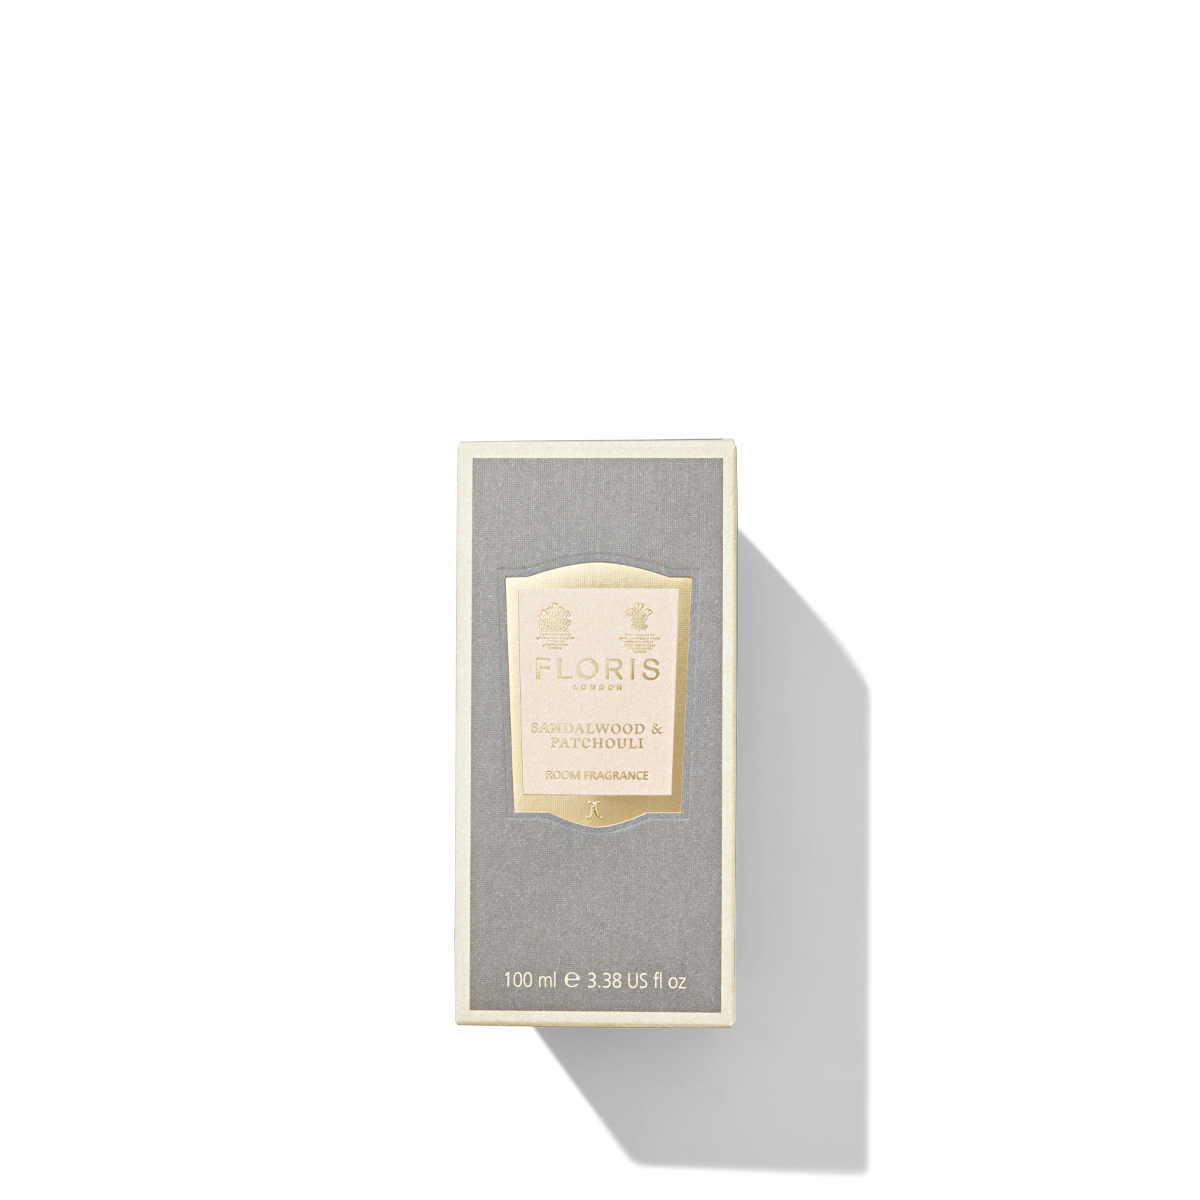 Sandalwood & Patchouli Room Fragrance box